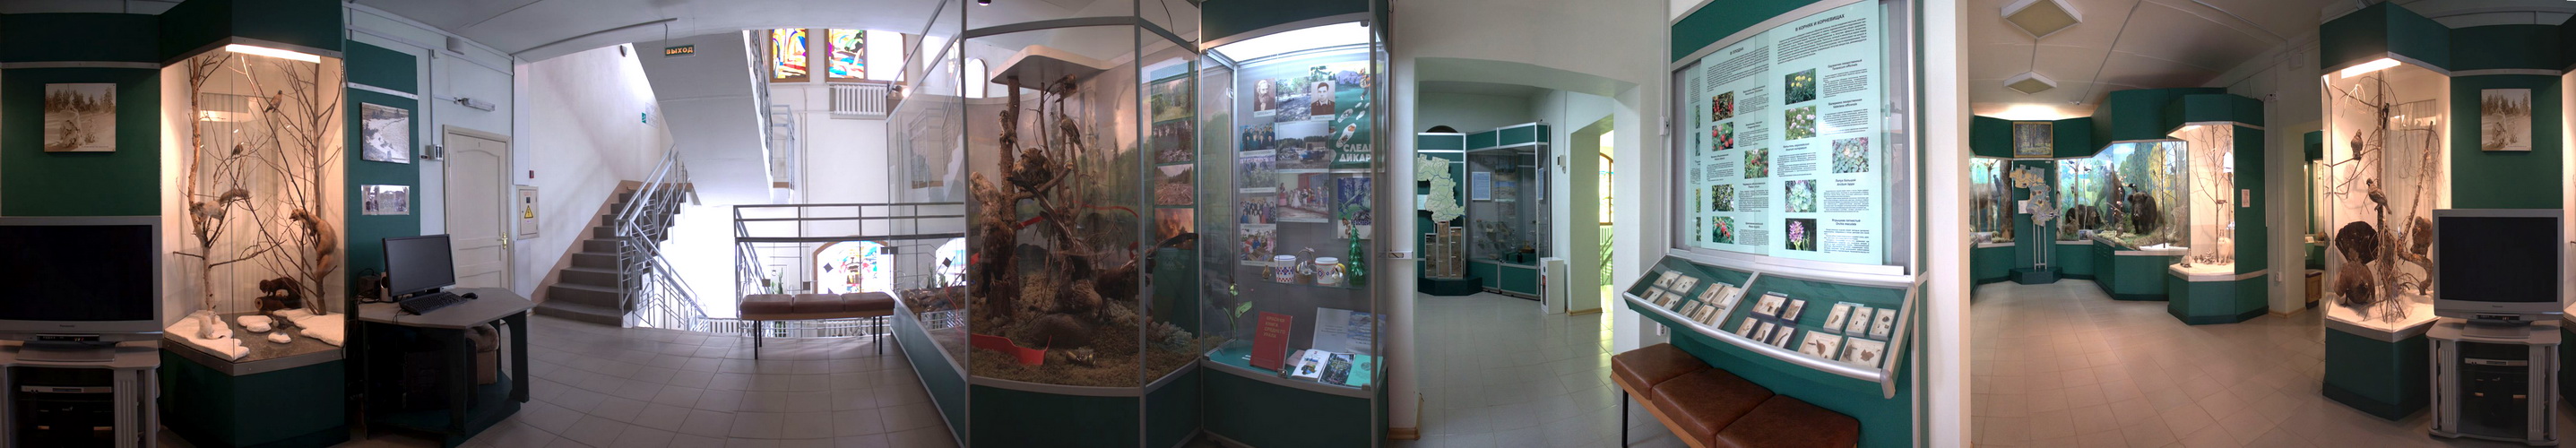 Subbotin-Permyak Museum